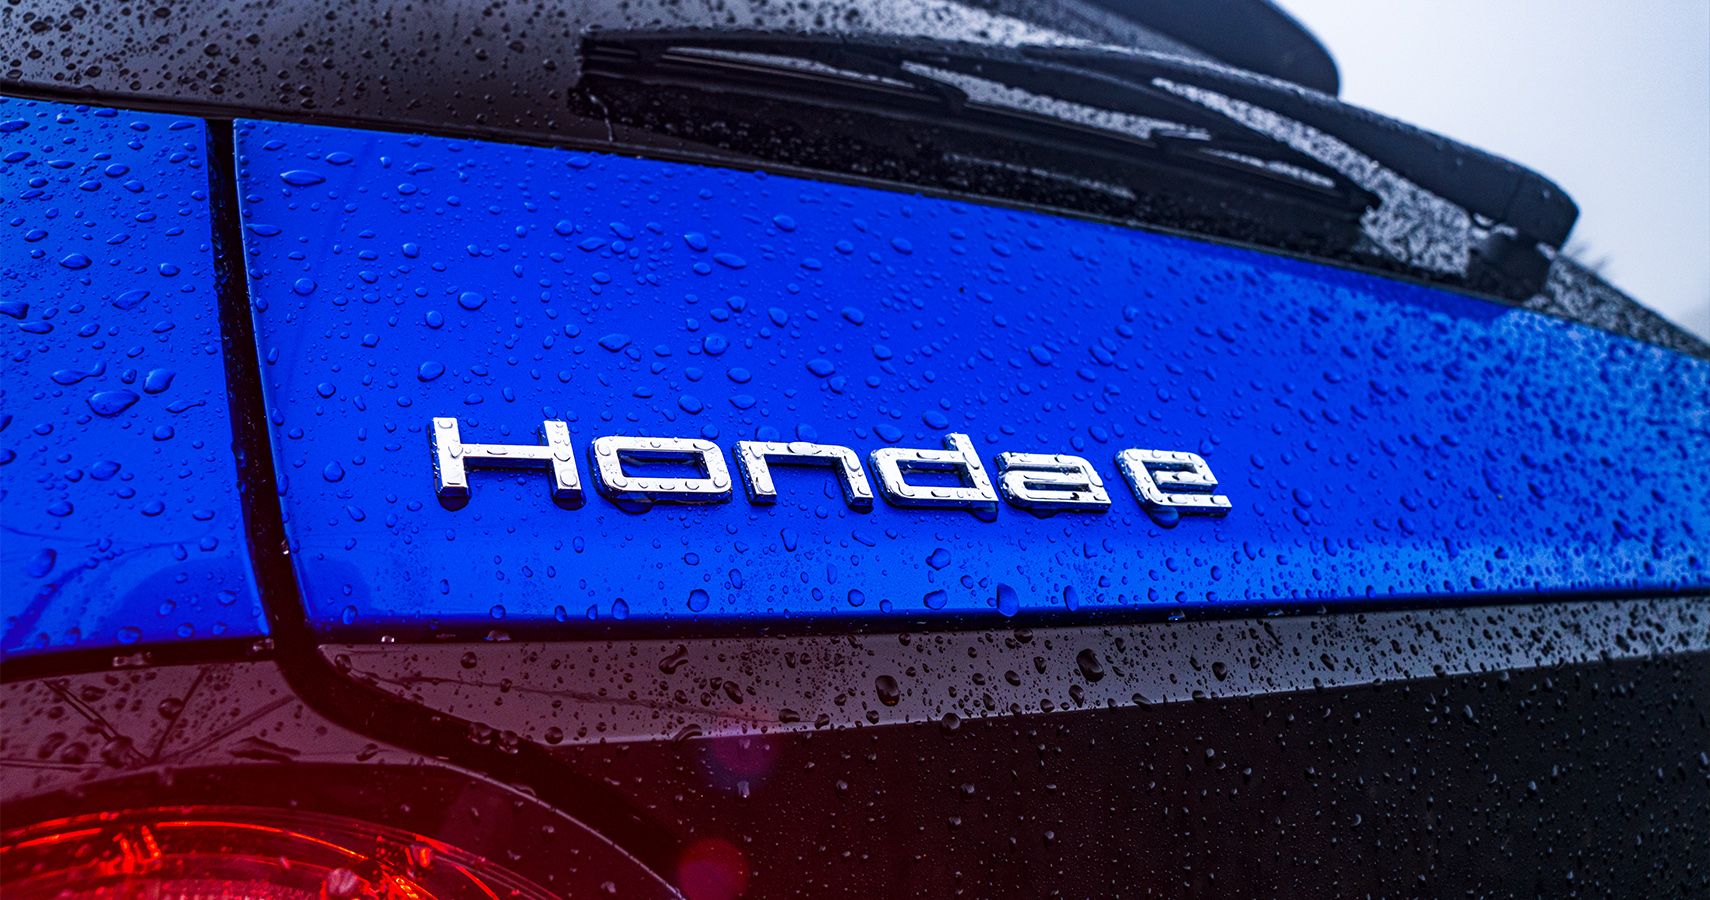 Honda e rear badge close-up